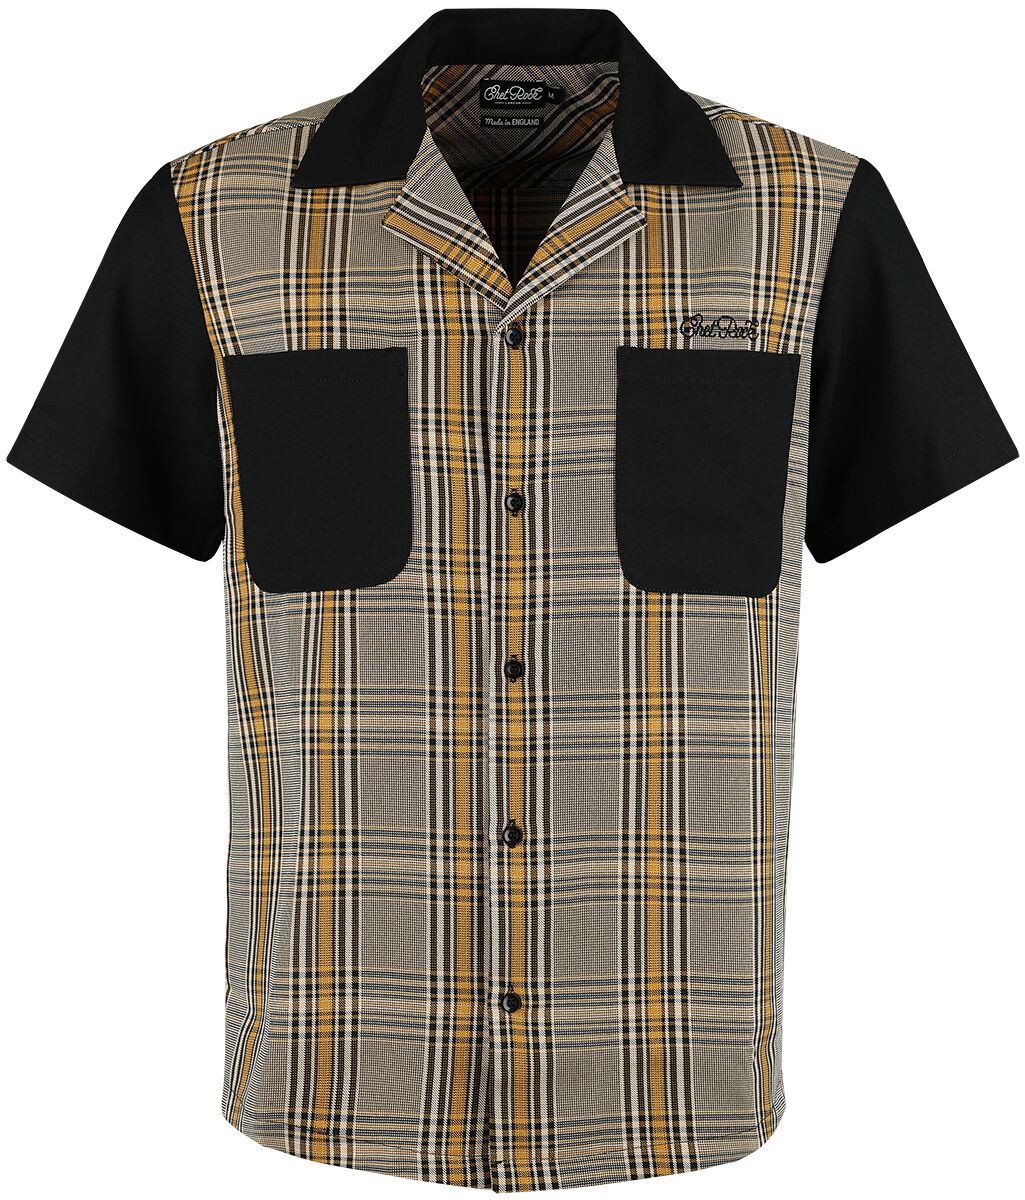 Chet Rock - Rockabilly Kurzarmhemd - Douglas Shirt - S bis 4XL - für Männer - Größe 4XL - multicolor